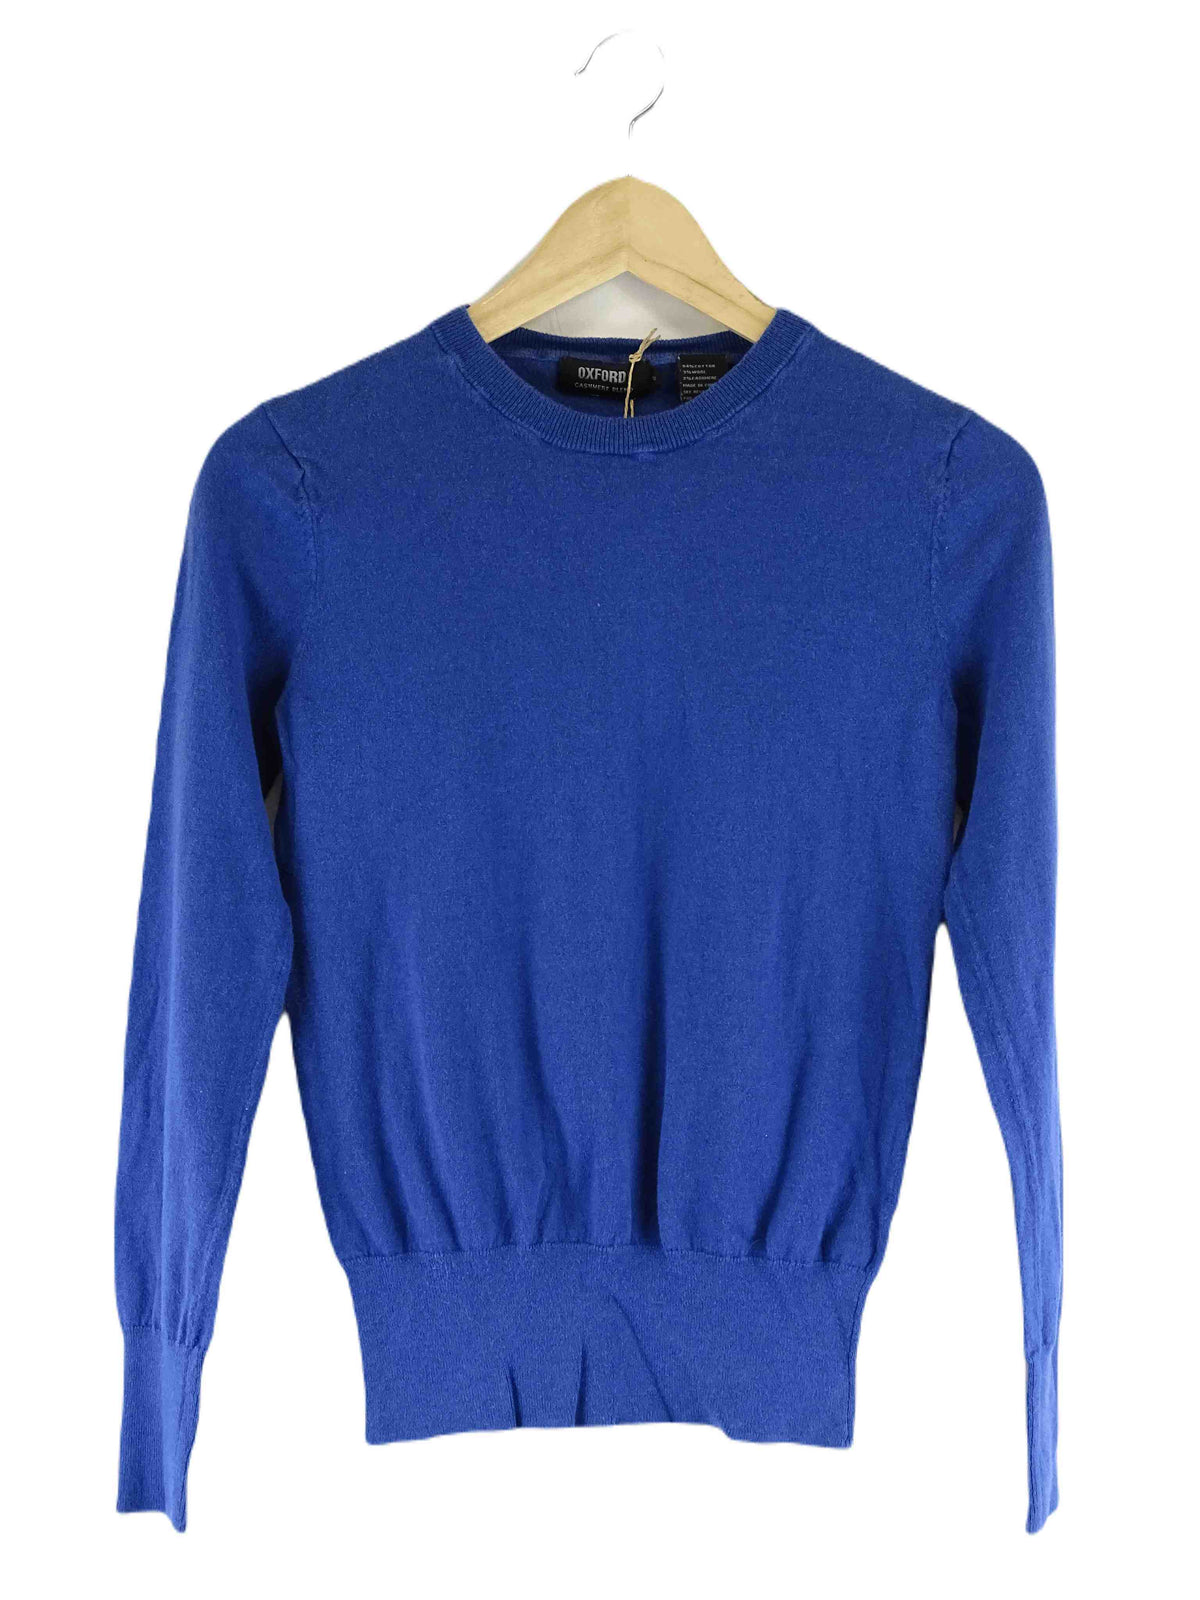 Oxford Blue Cashmere Blend Sweater 6